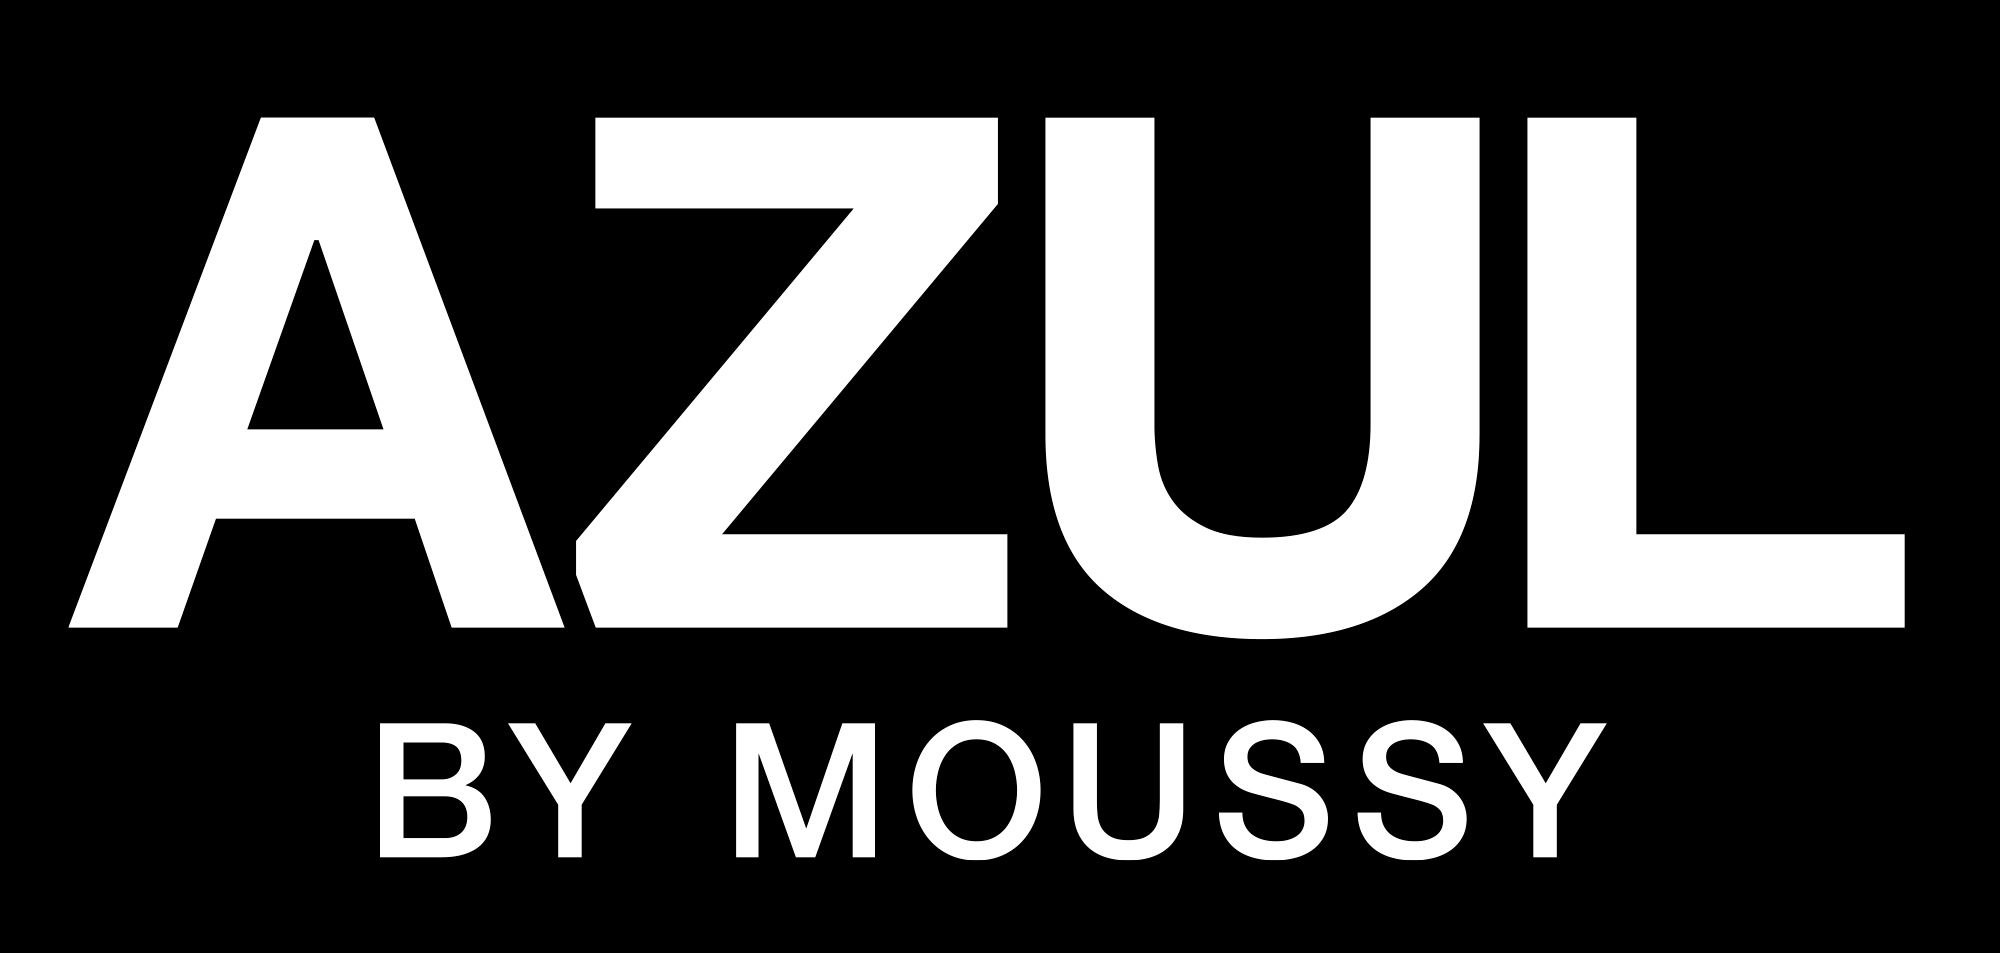 AZUL BY MOUSSYのロゴ画像